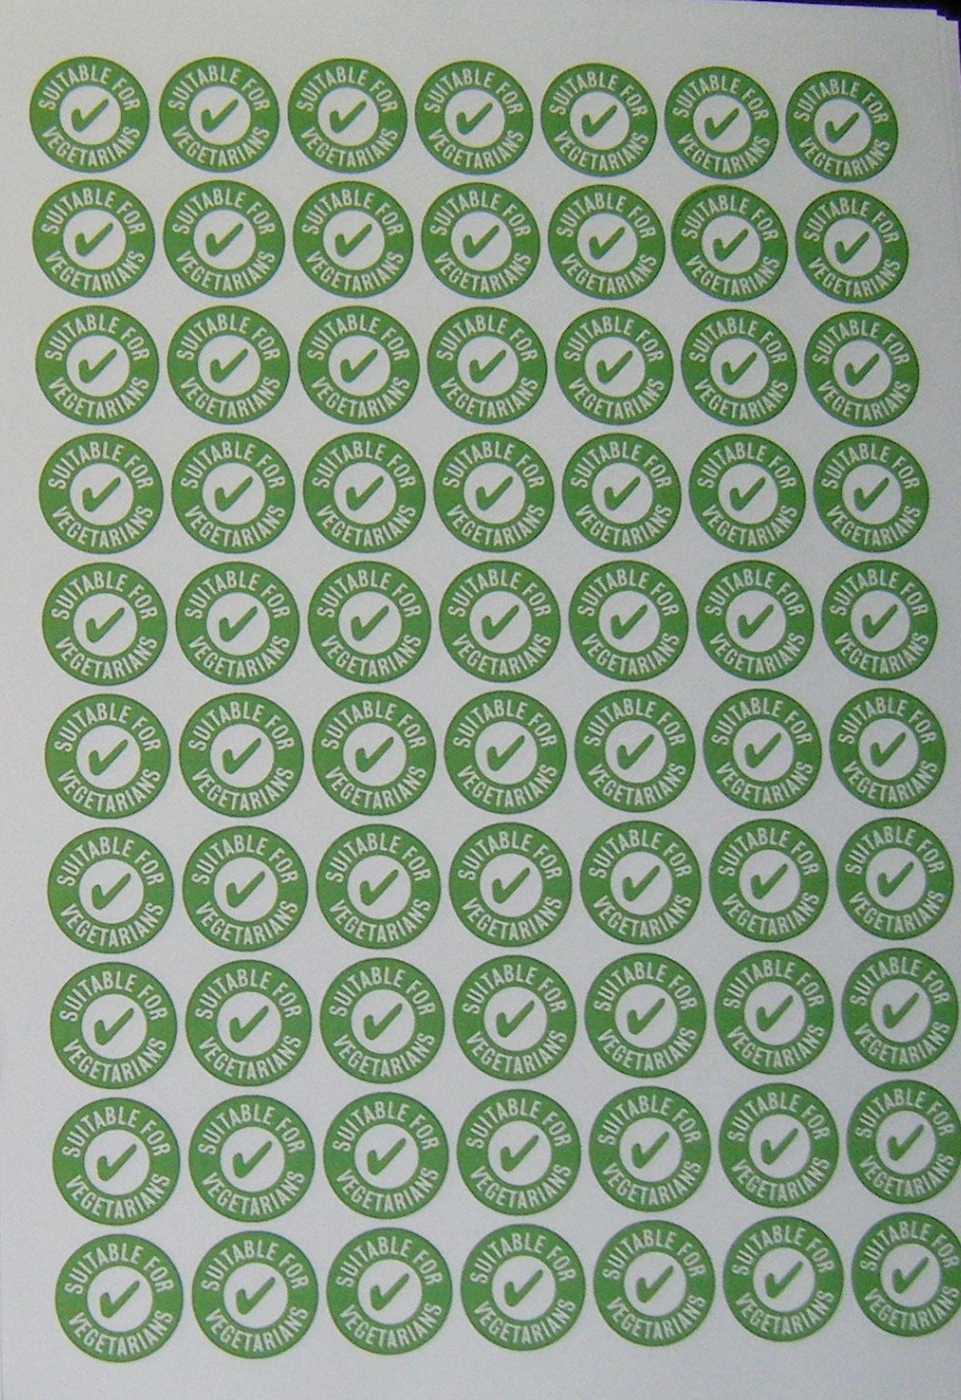 A4 Sheet of Vegetarian Stickers 